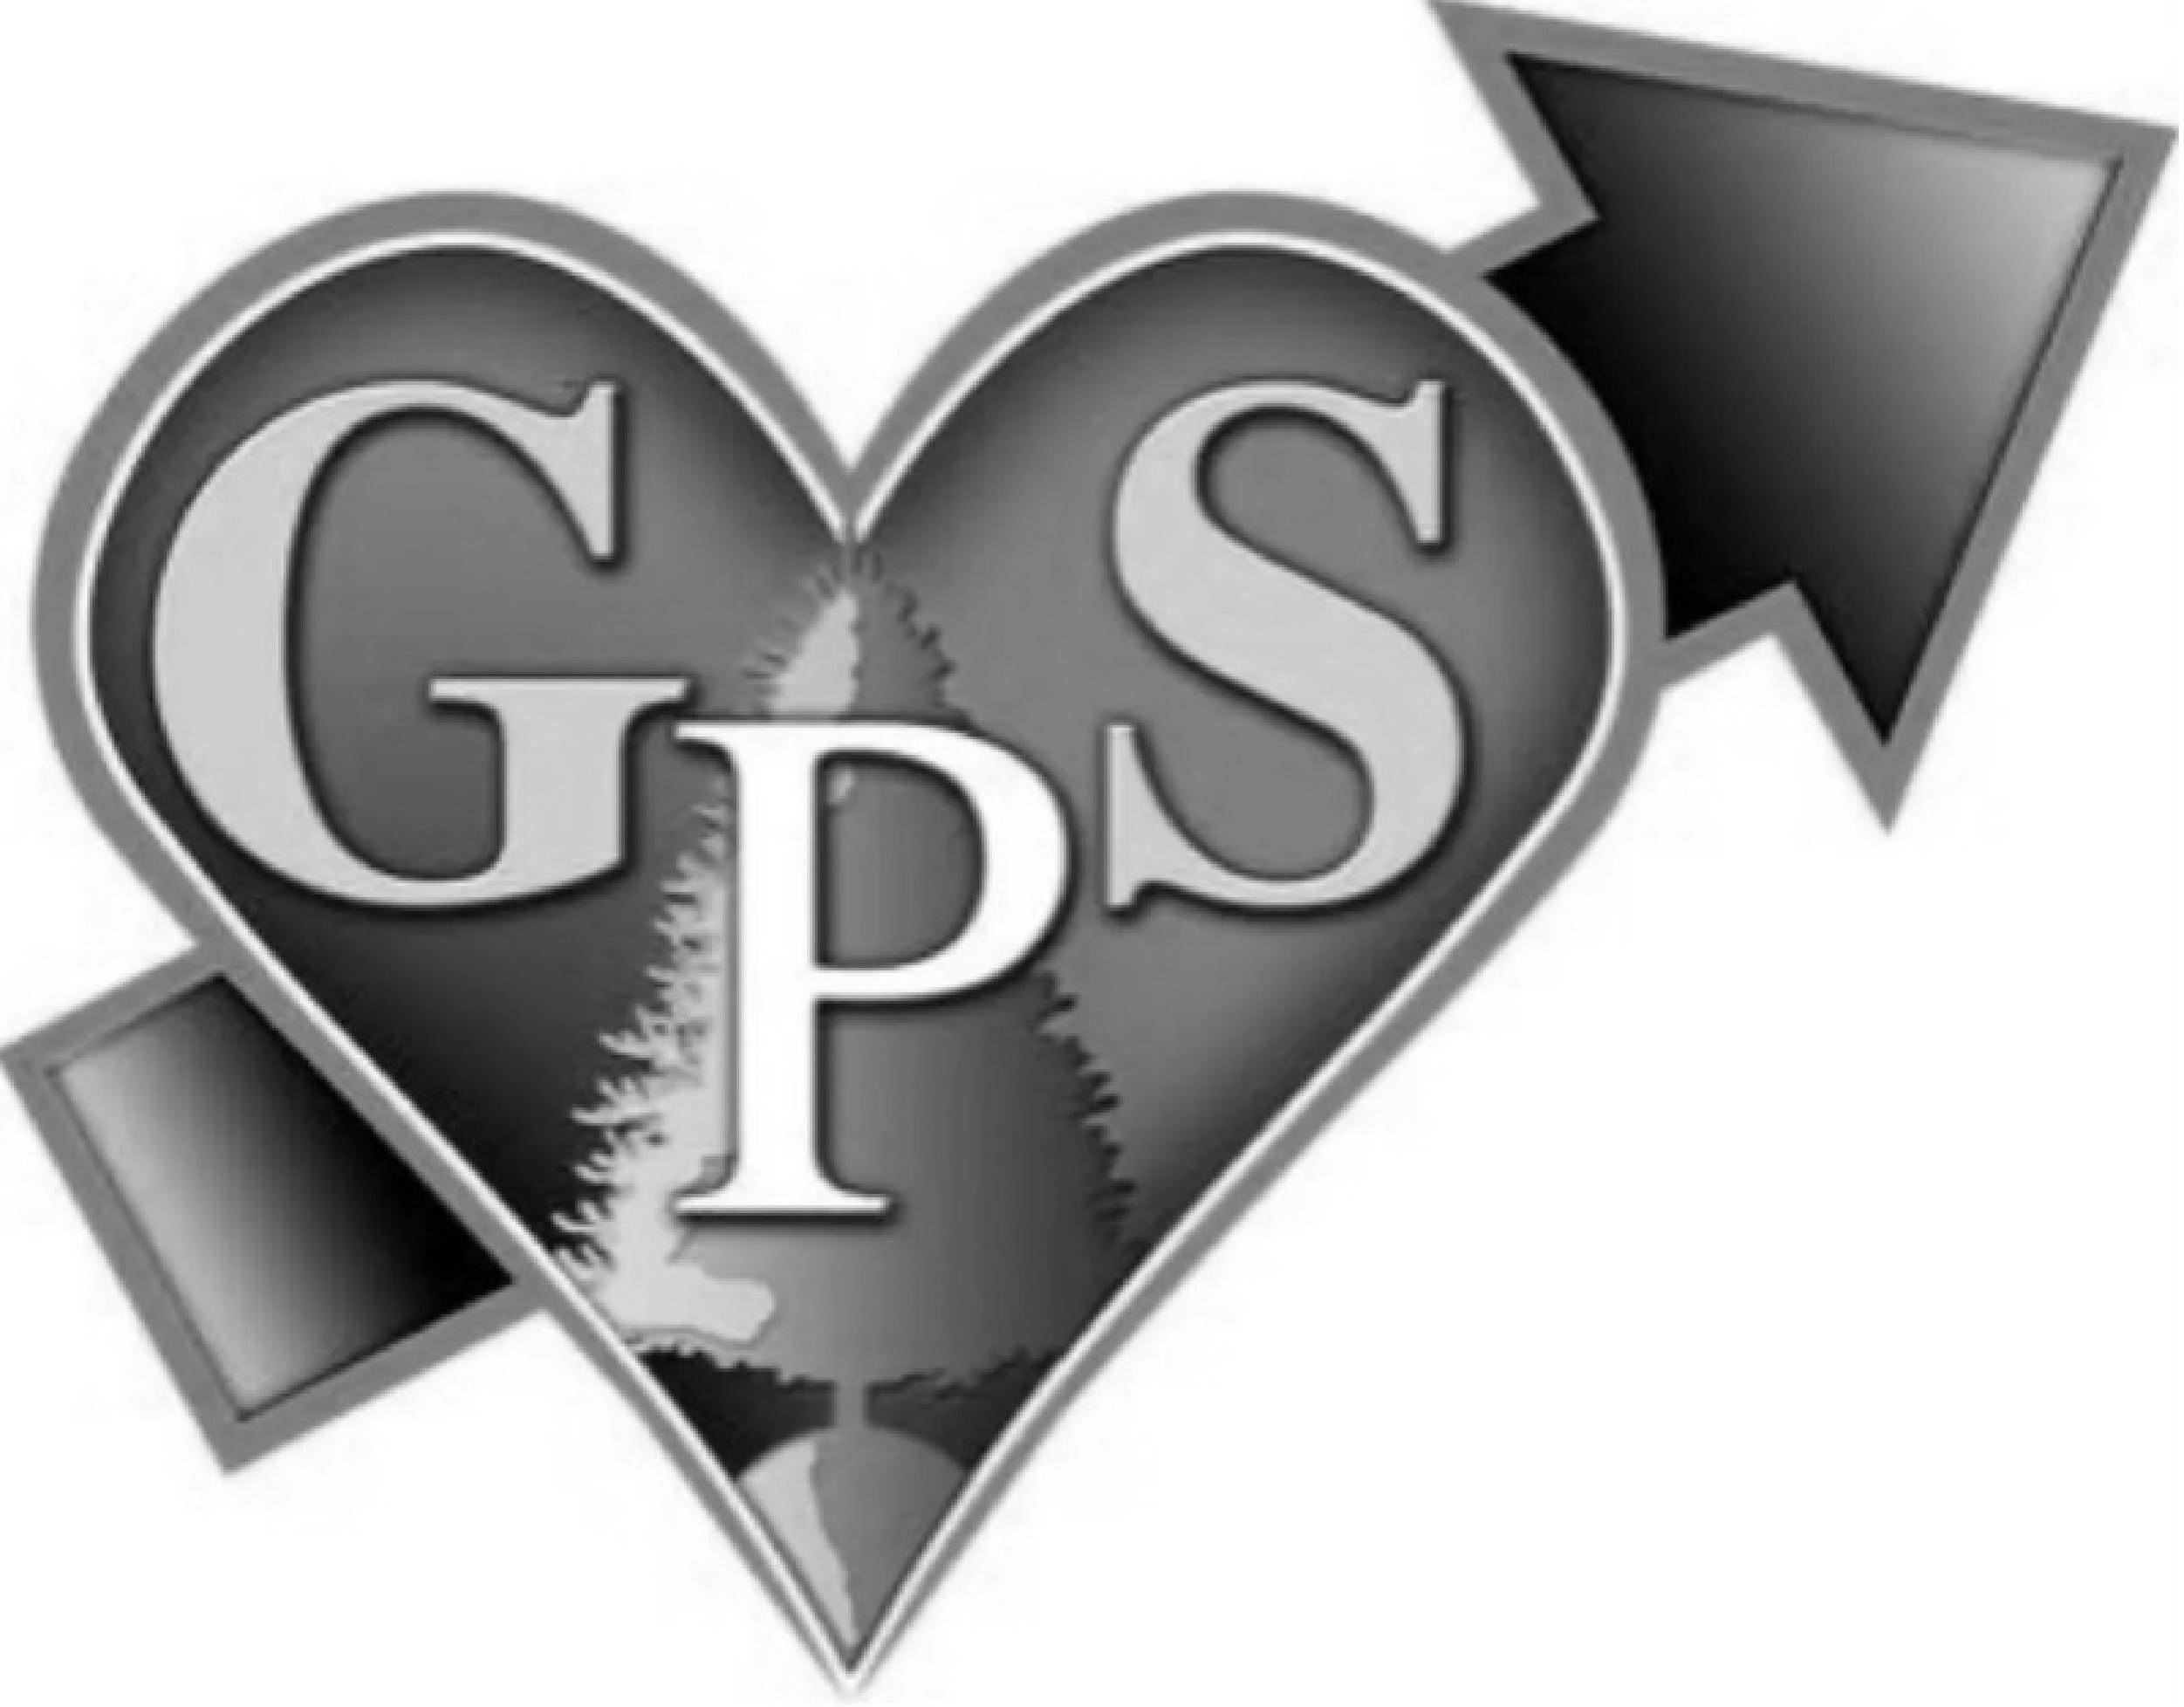 Trademark Logo GPS